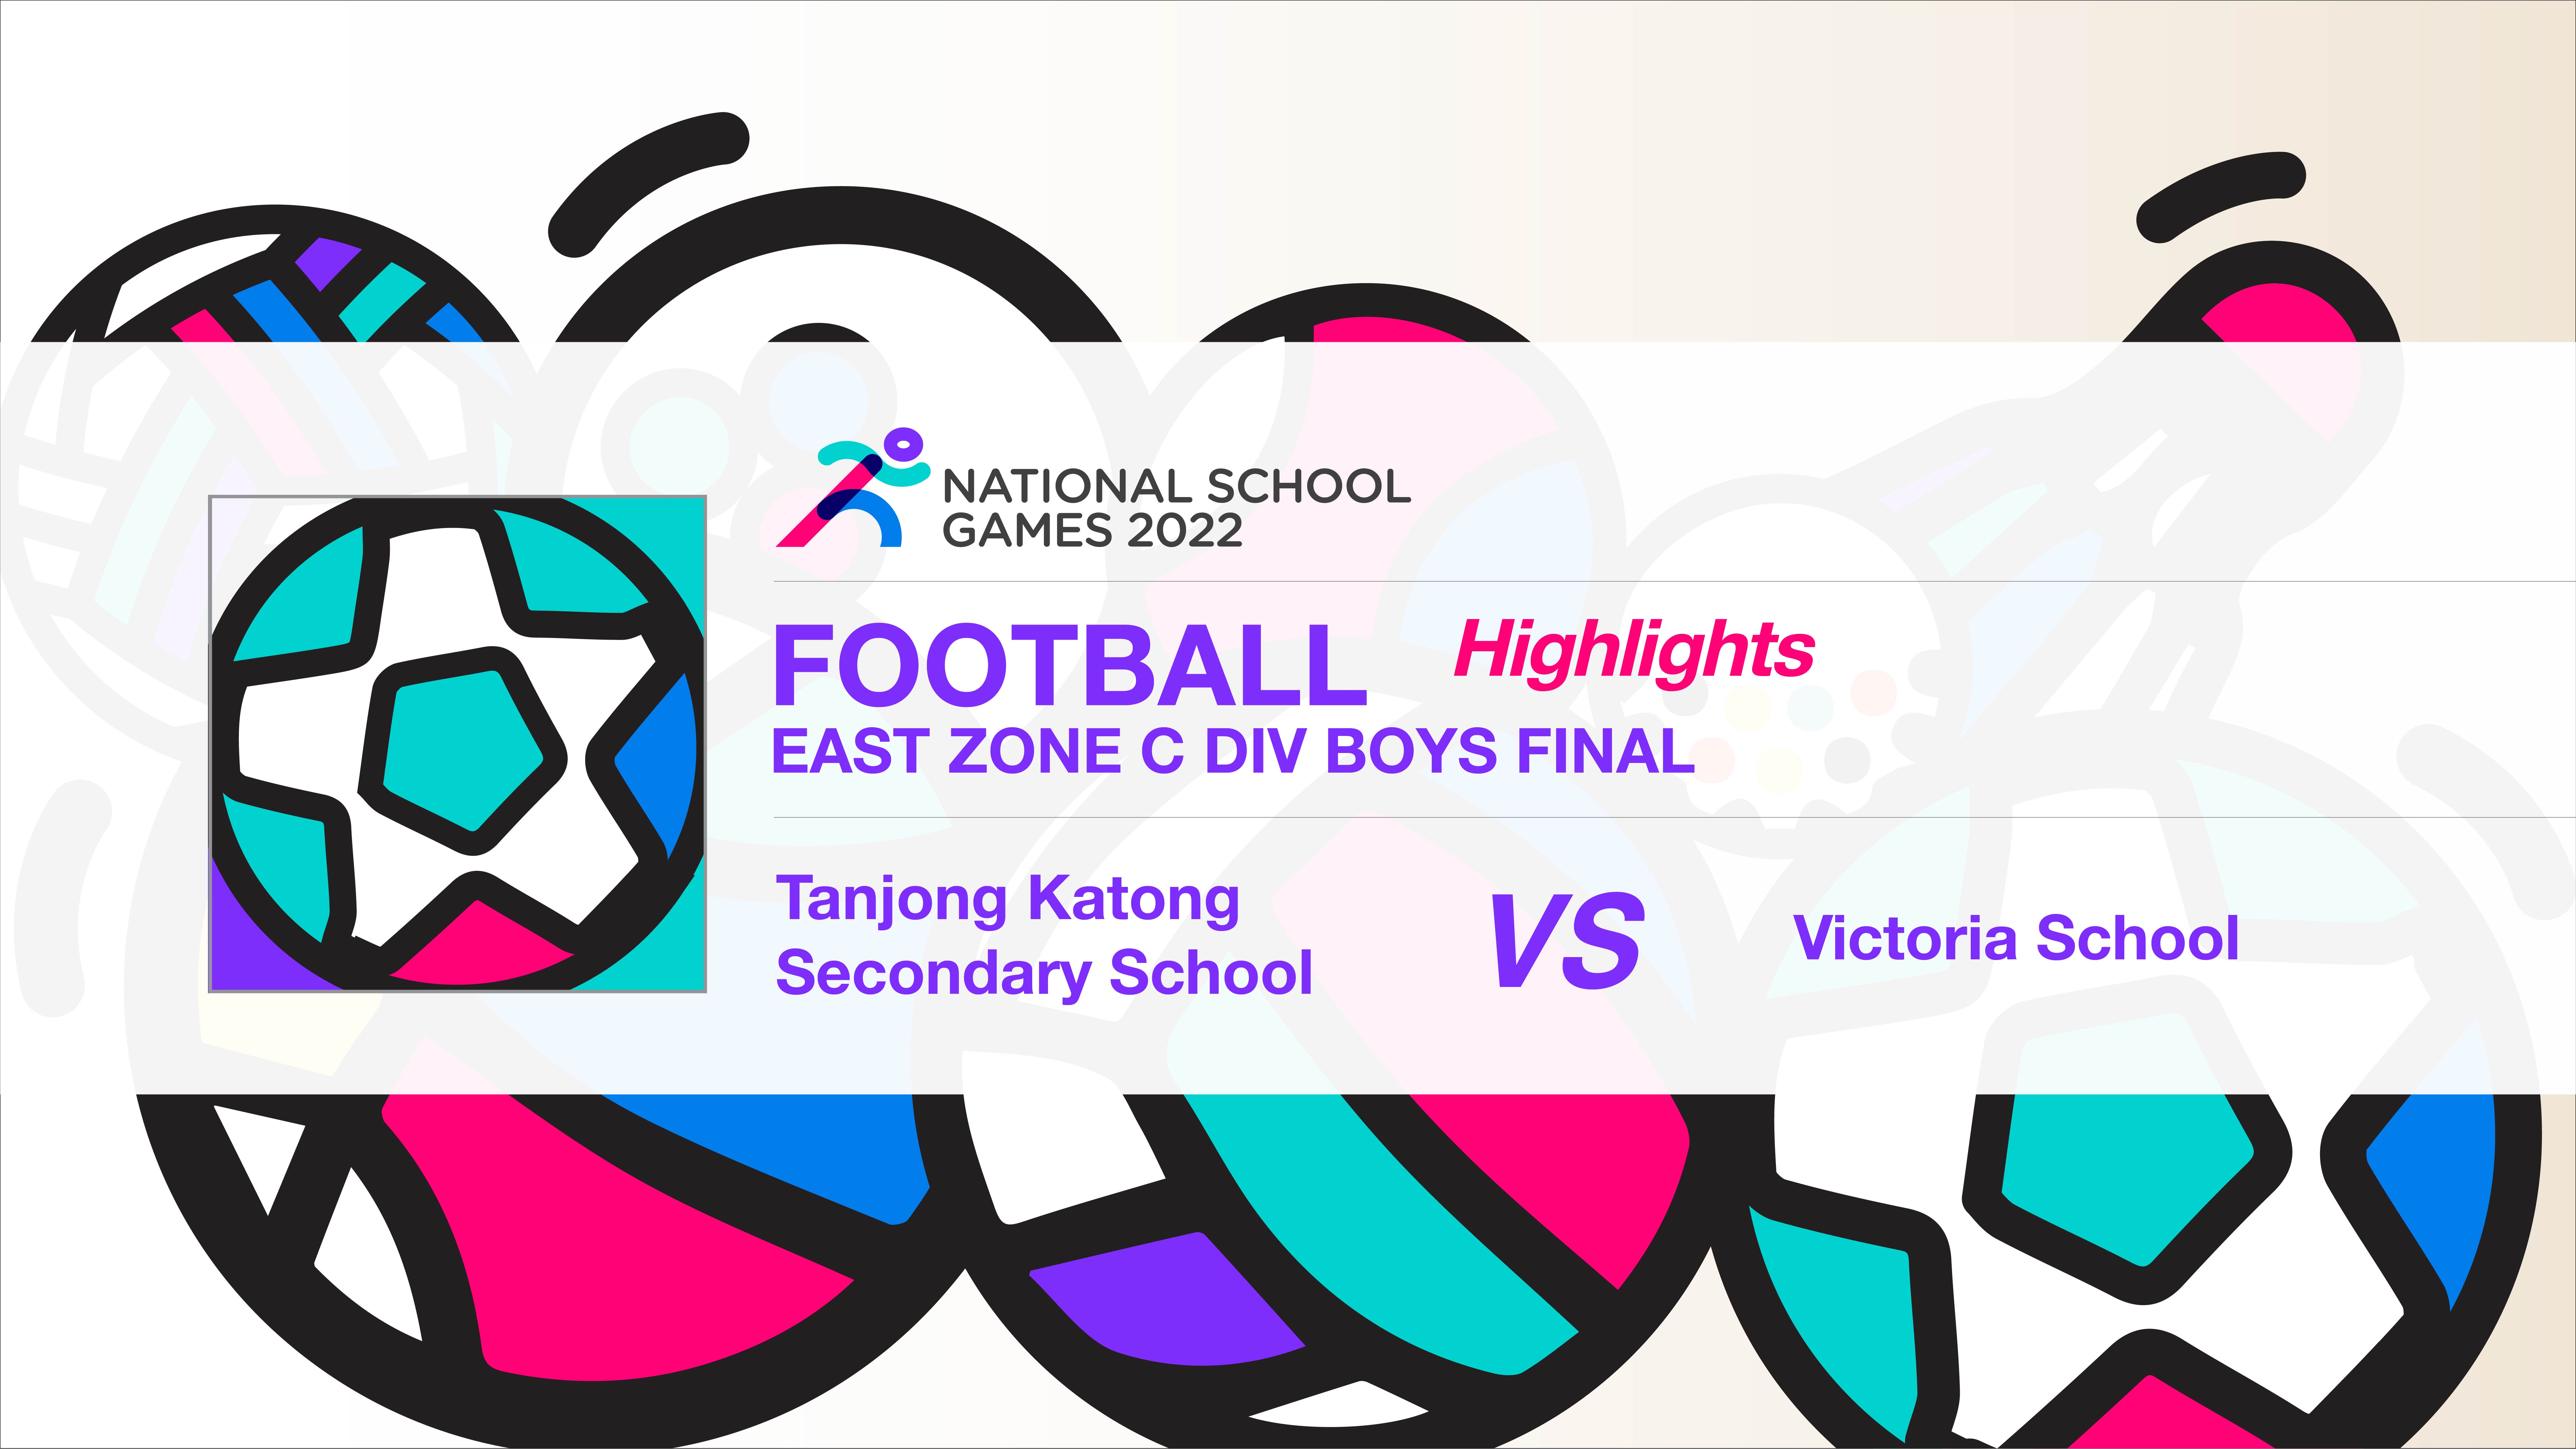 SSSC Football East Zone C Division Boys Final | Tanjong Katong Secondary School vs Victoria School - Highlights